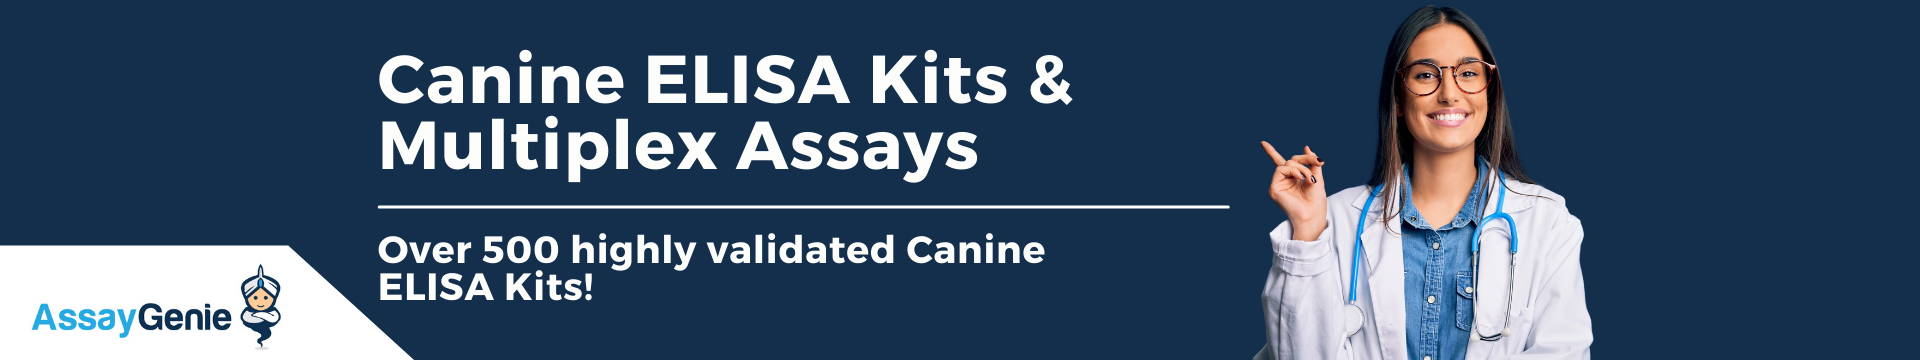 Canine ELISA Kits